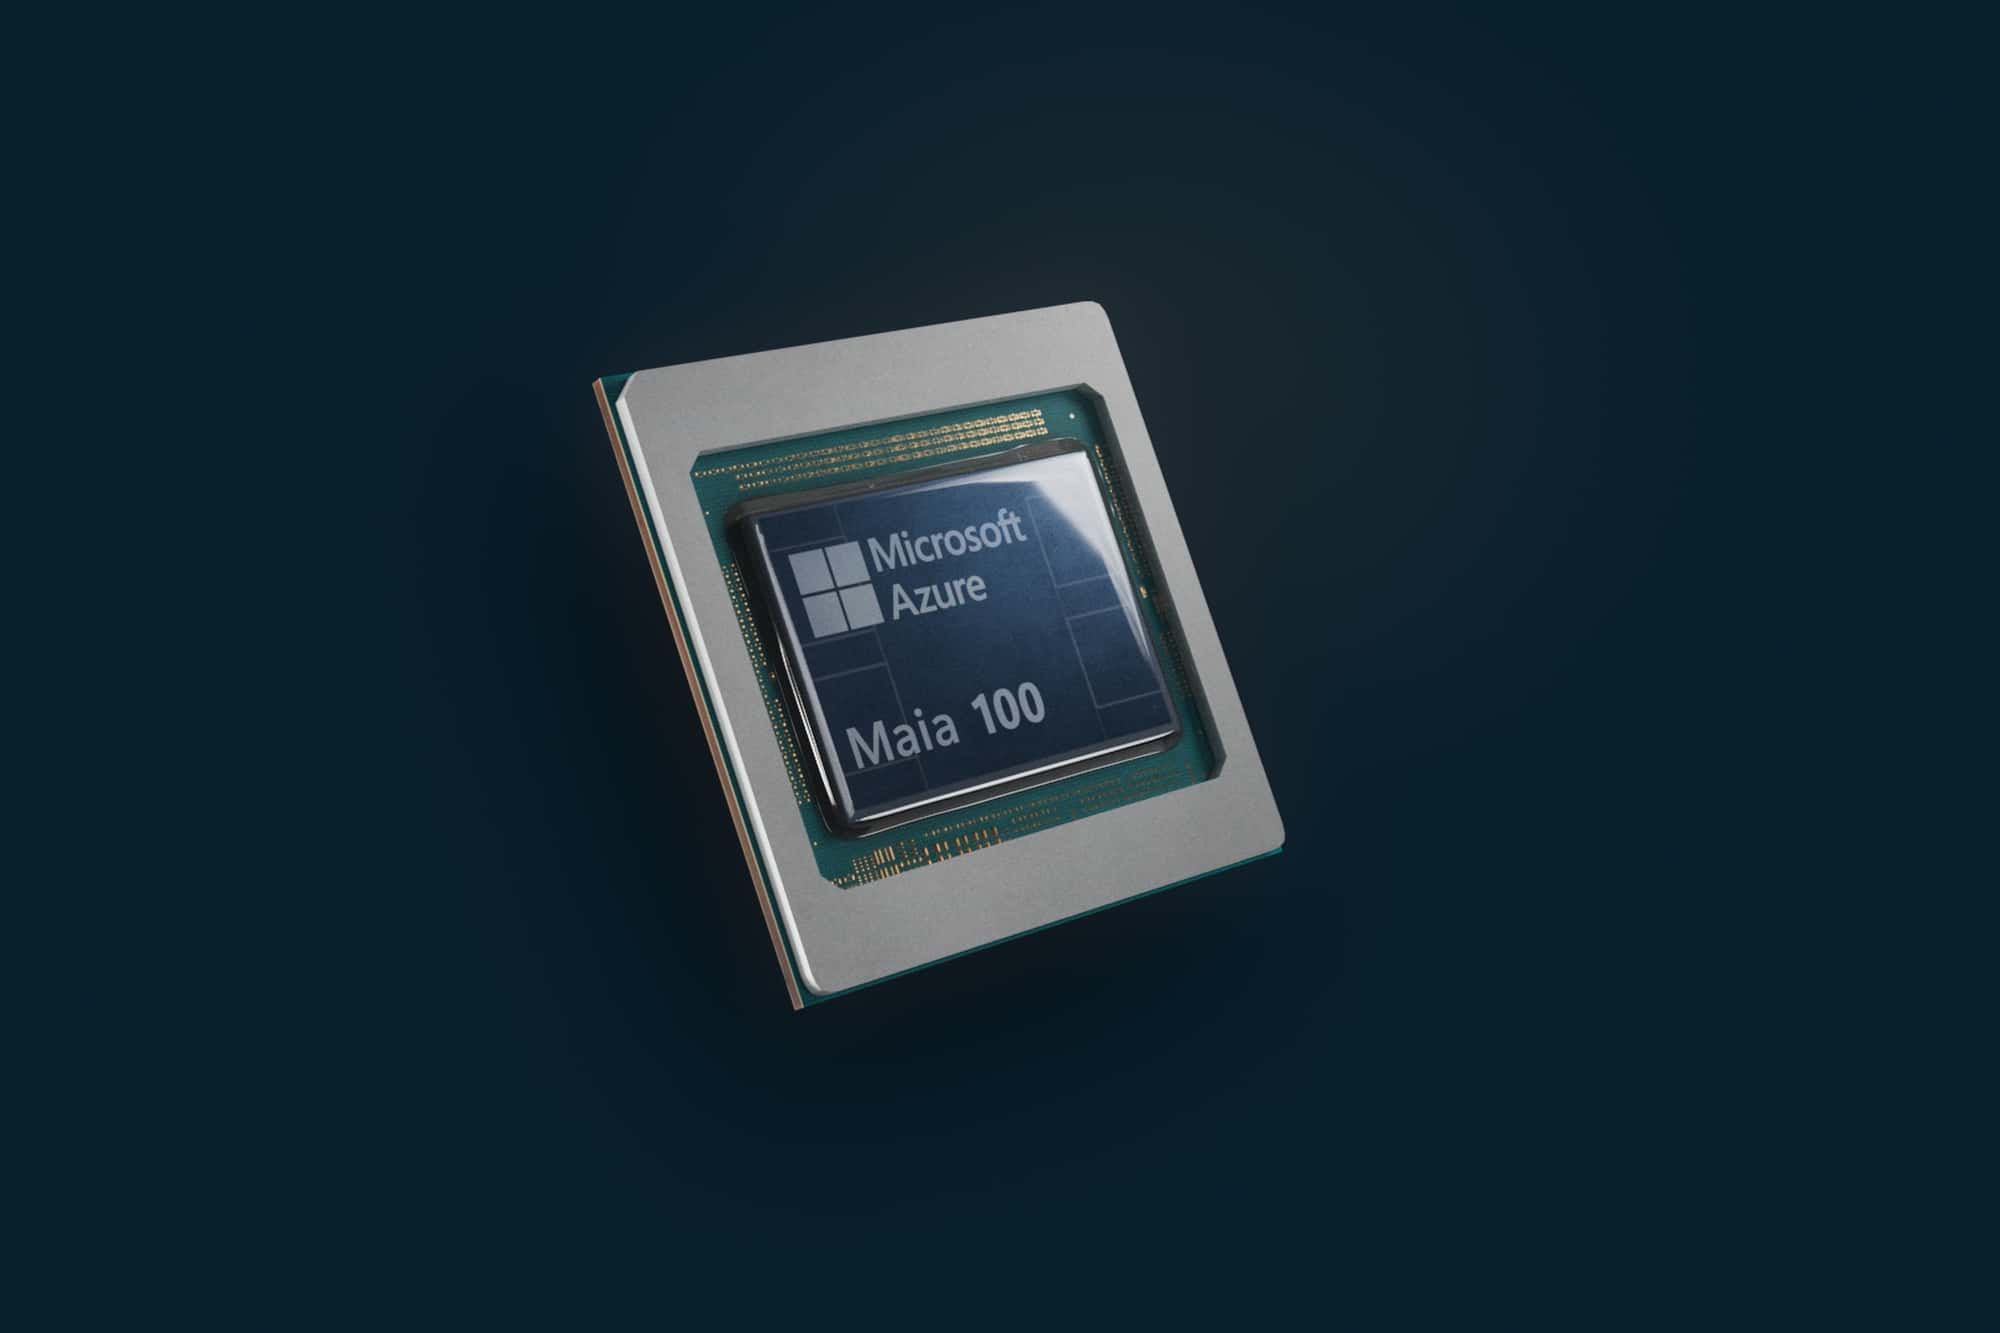 The Microsoft Azure Maia 100 chip